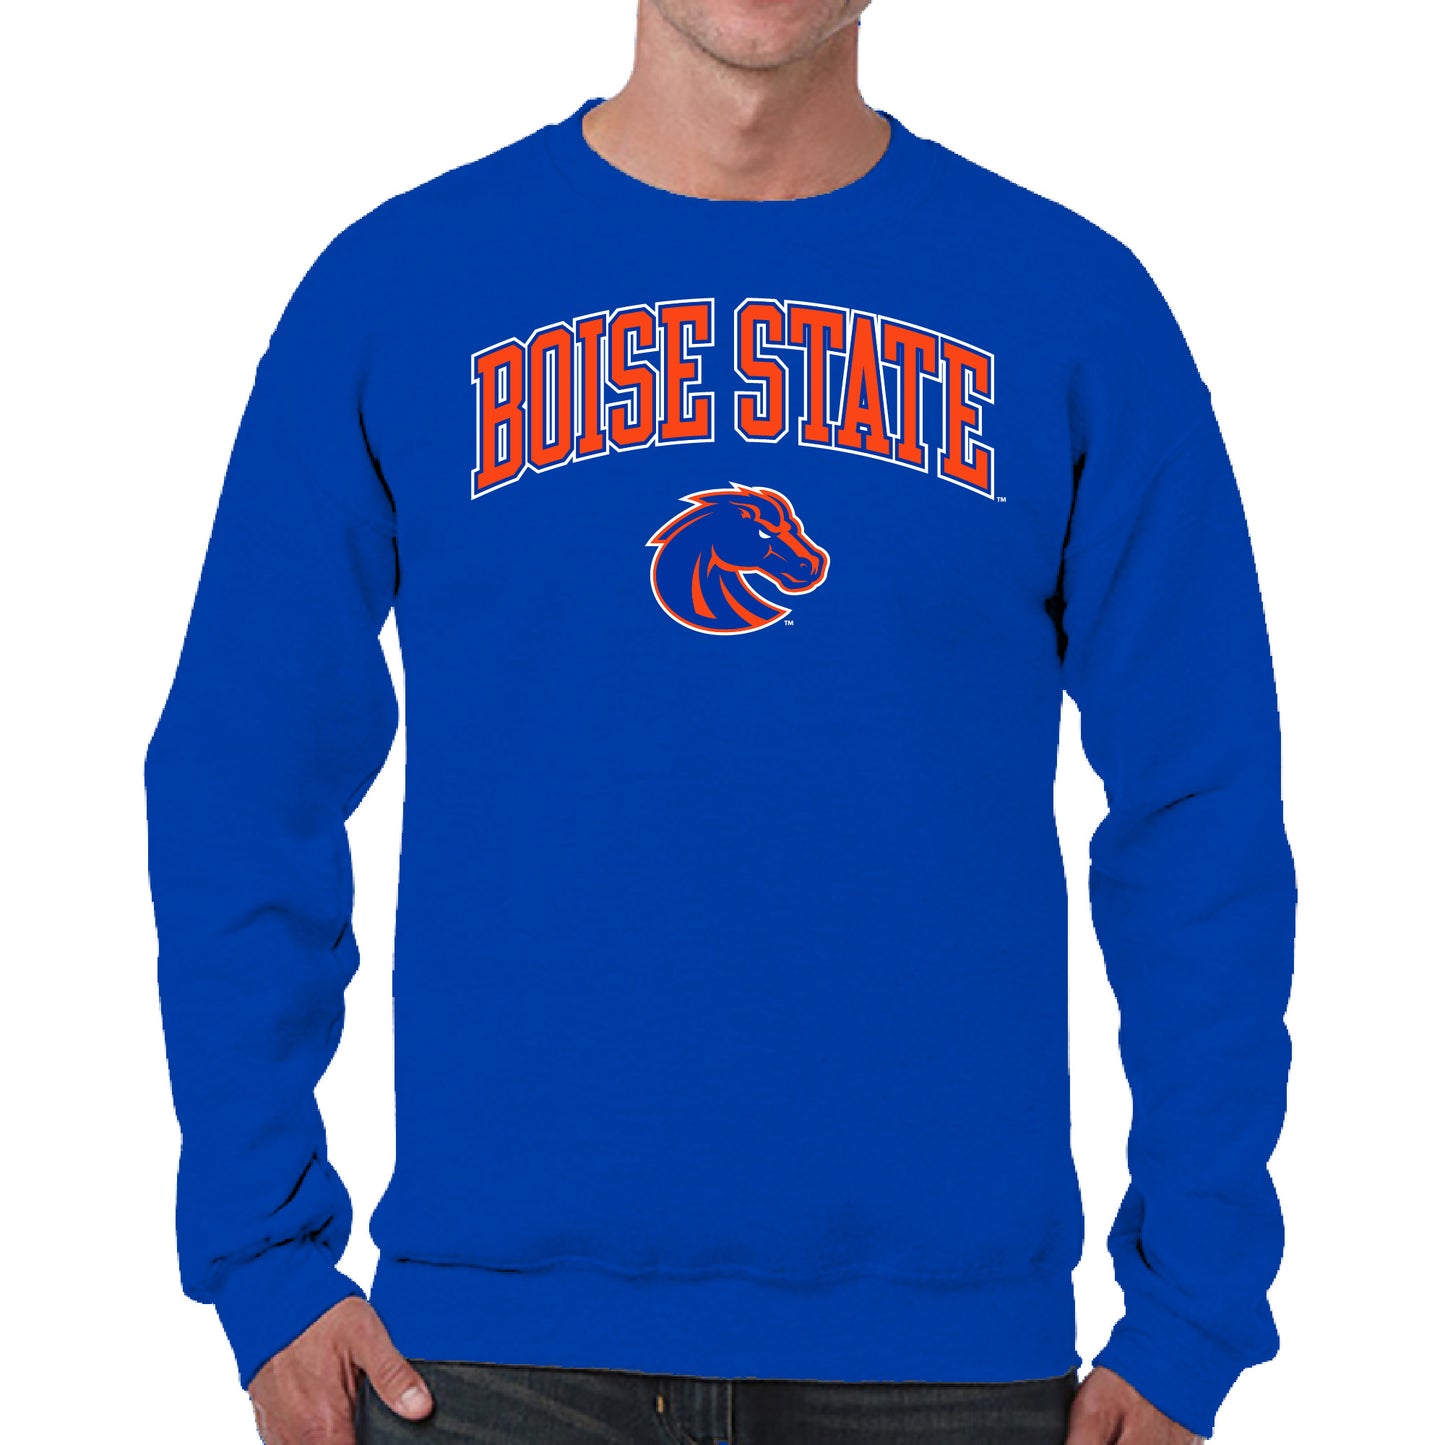 Boise State Broncos Adult Arch & Logo Soft Style Gameday Crewneck Sweatshirt - Royal